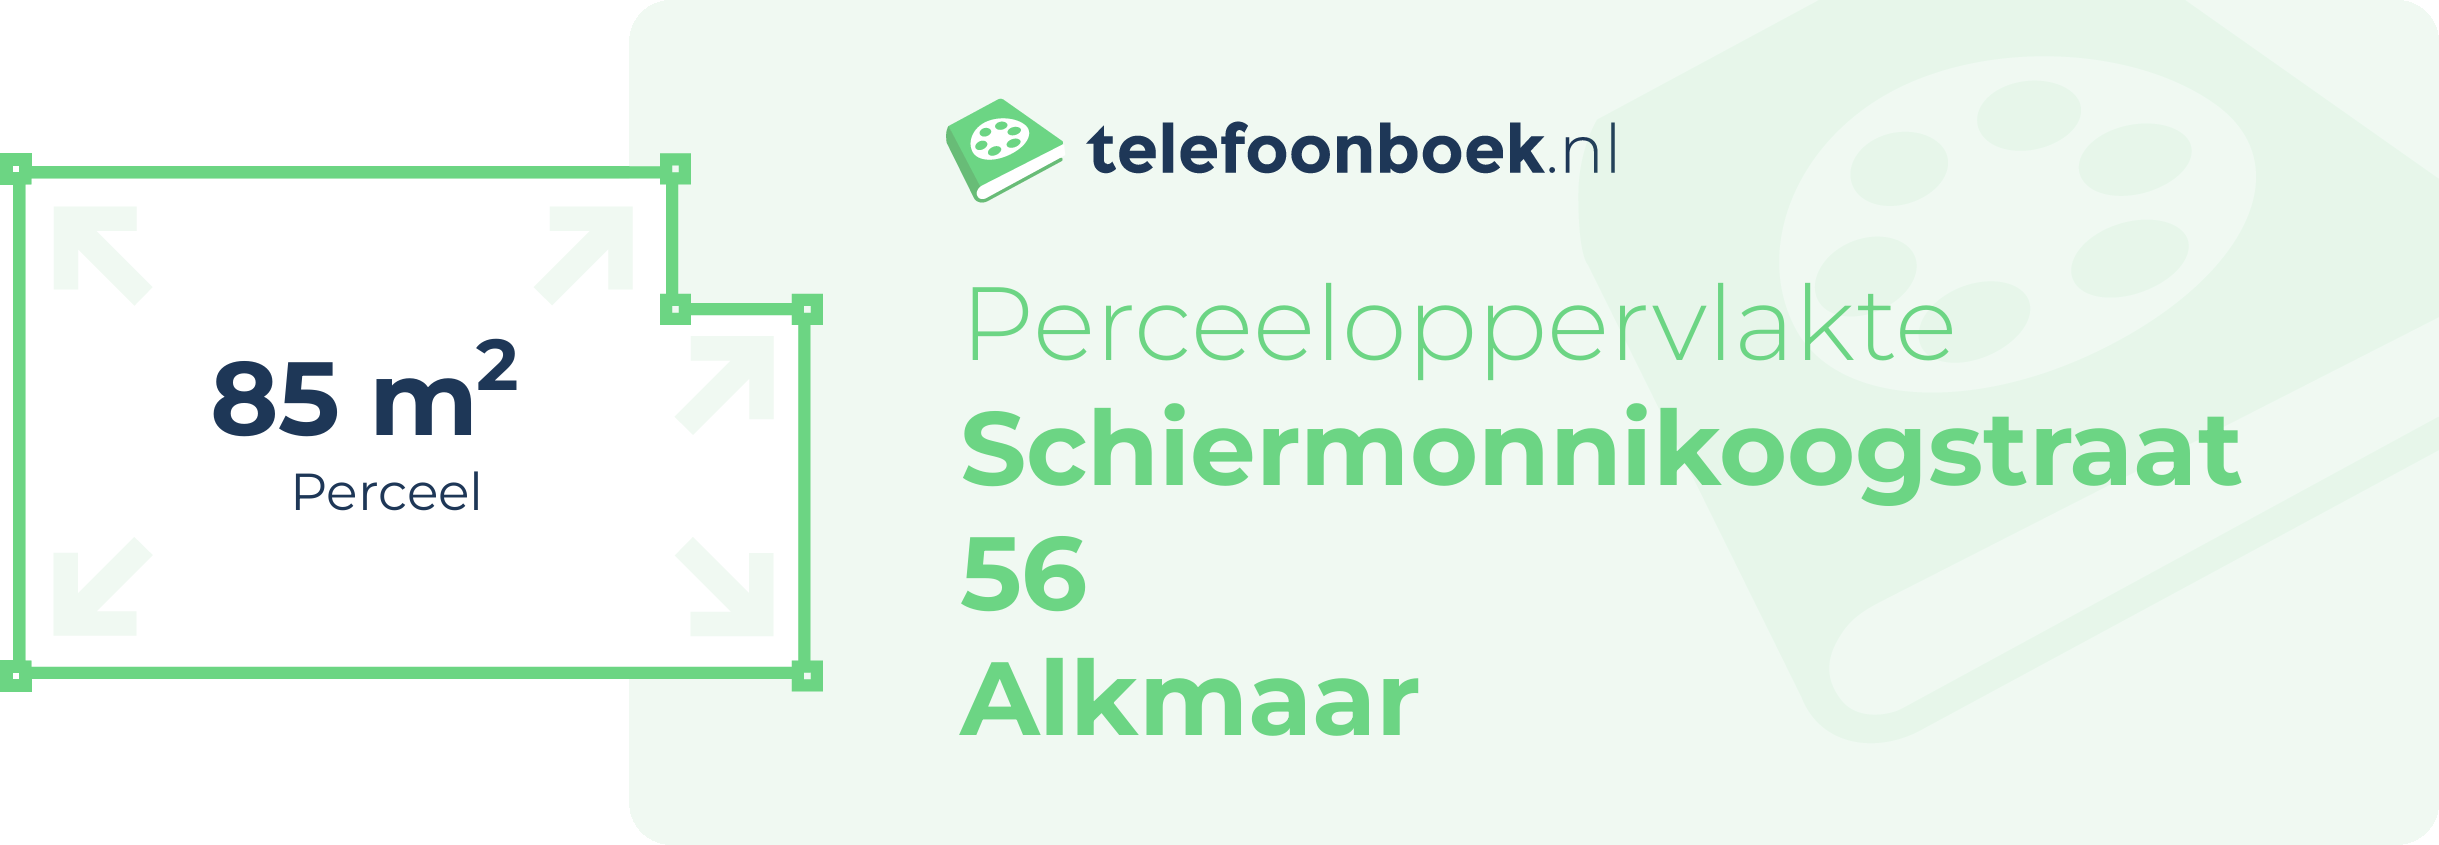 Perceeloppervlakte Schiermonnikoogstraat 56 Alkmaar